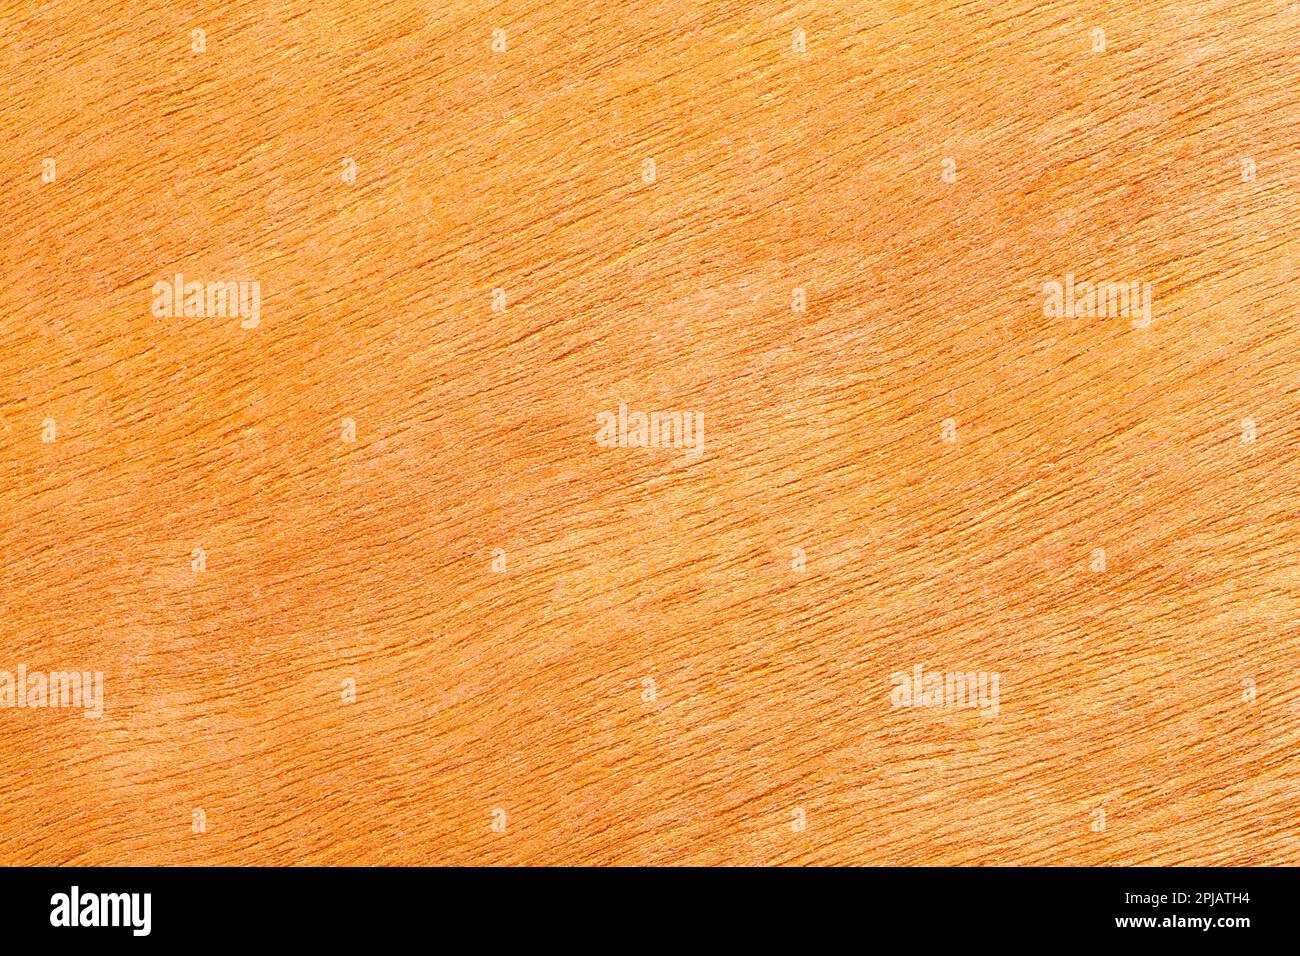 Hardwood Wood Grain Texture Background Close Up. Stock Photo